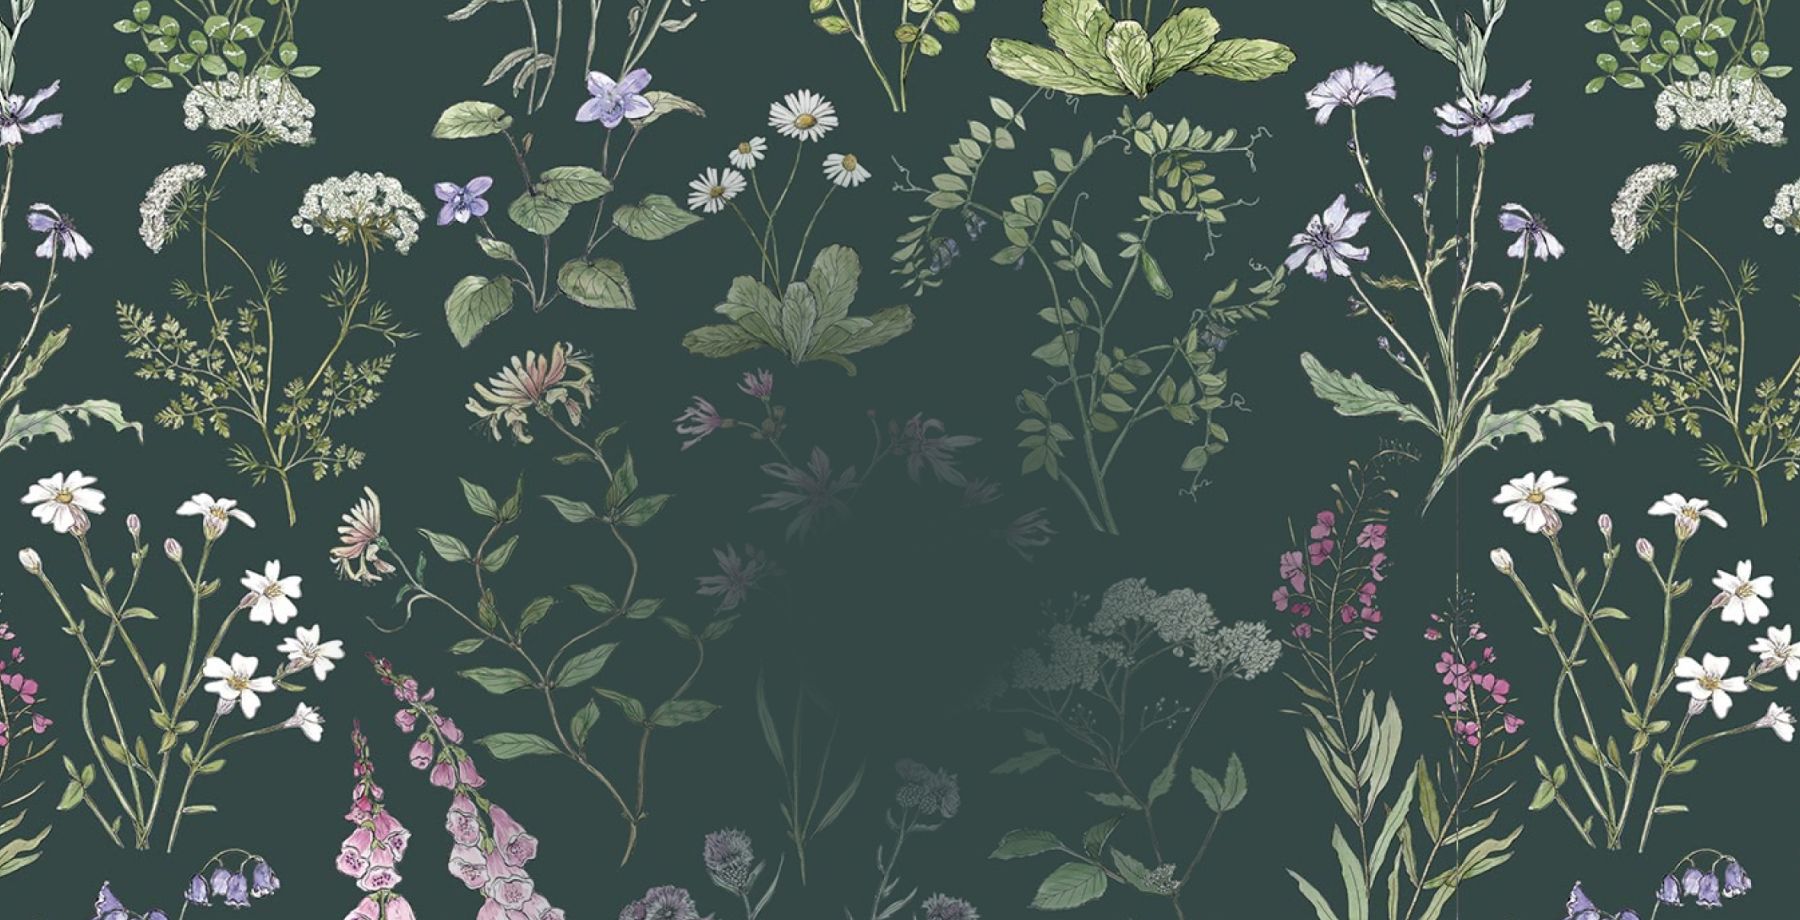 Wallpaper Republic - Floral Emporium Collection -Full Image-Hero Image-Wild Meadows Wallpaper-Dark Green